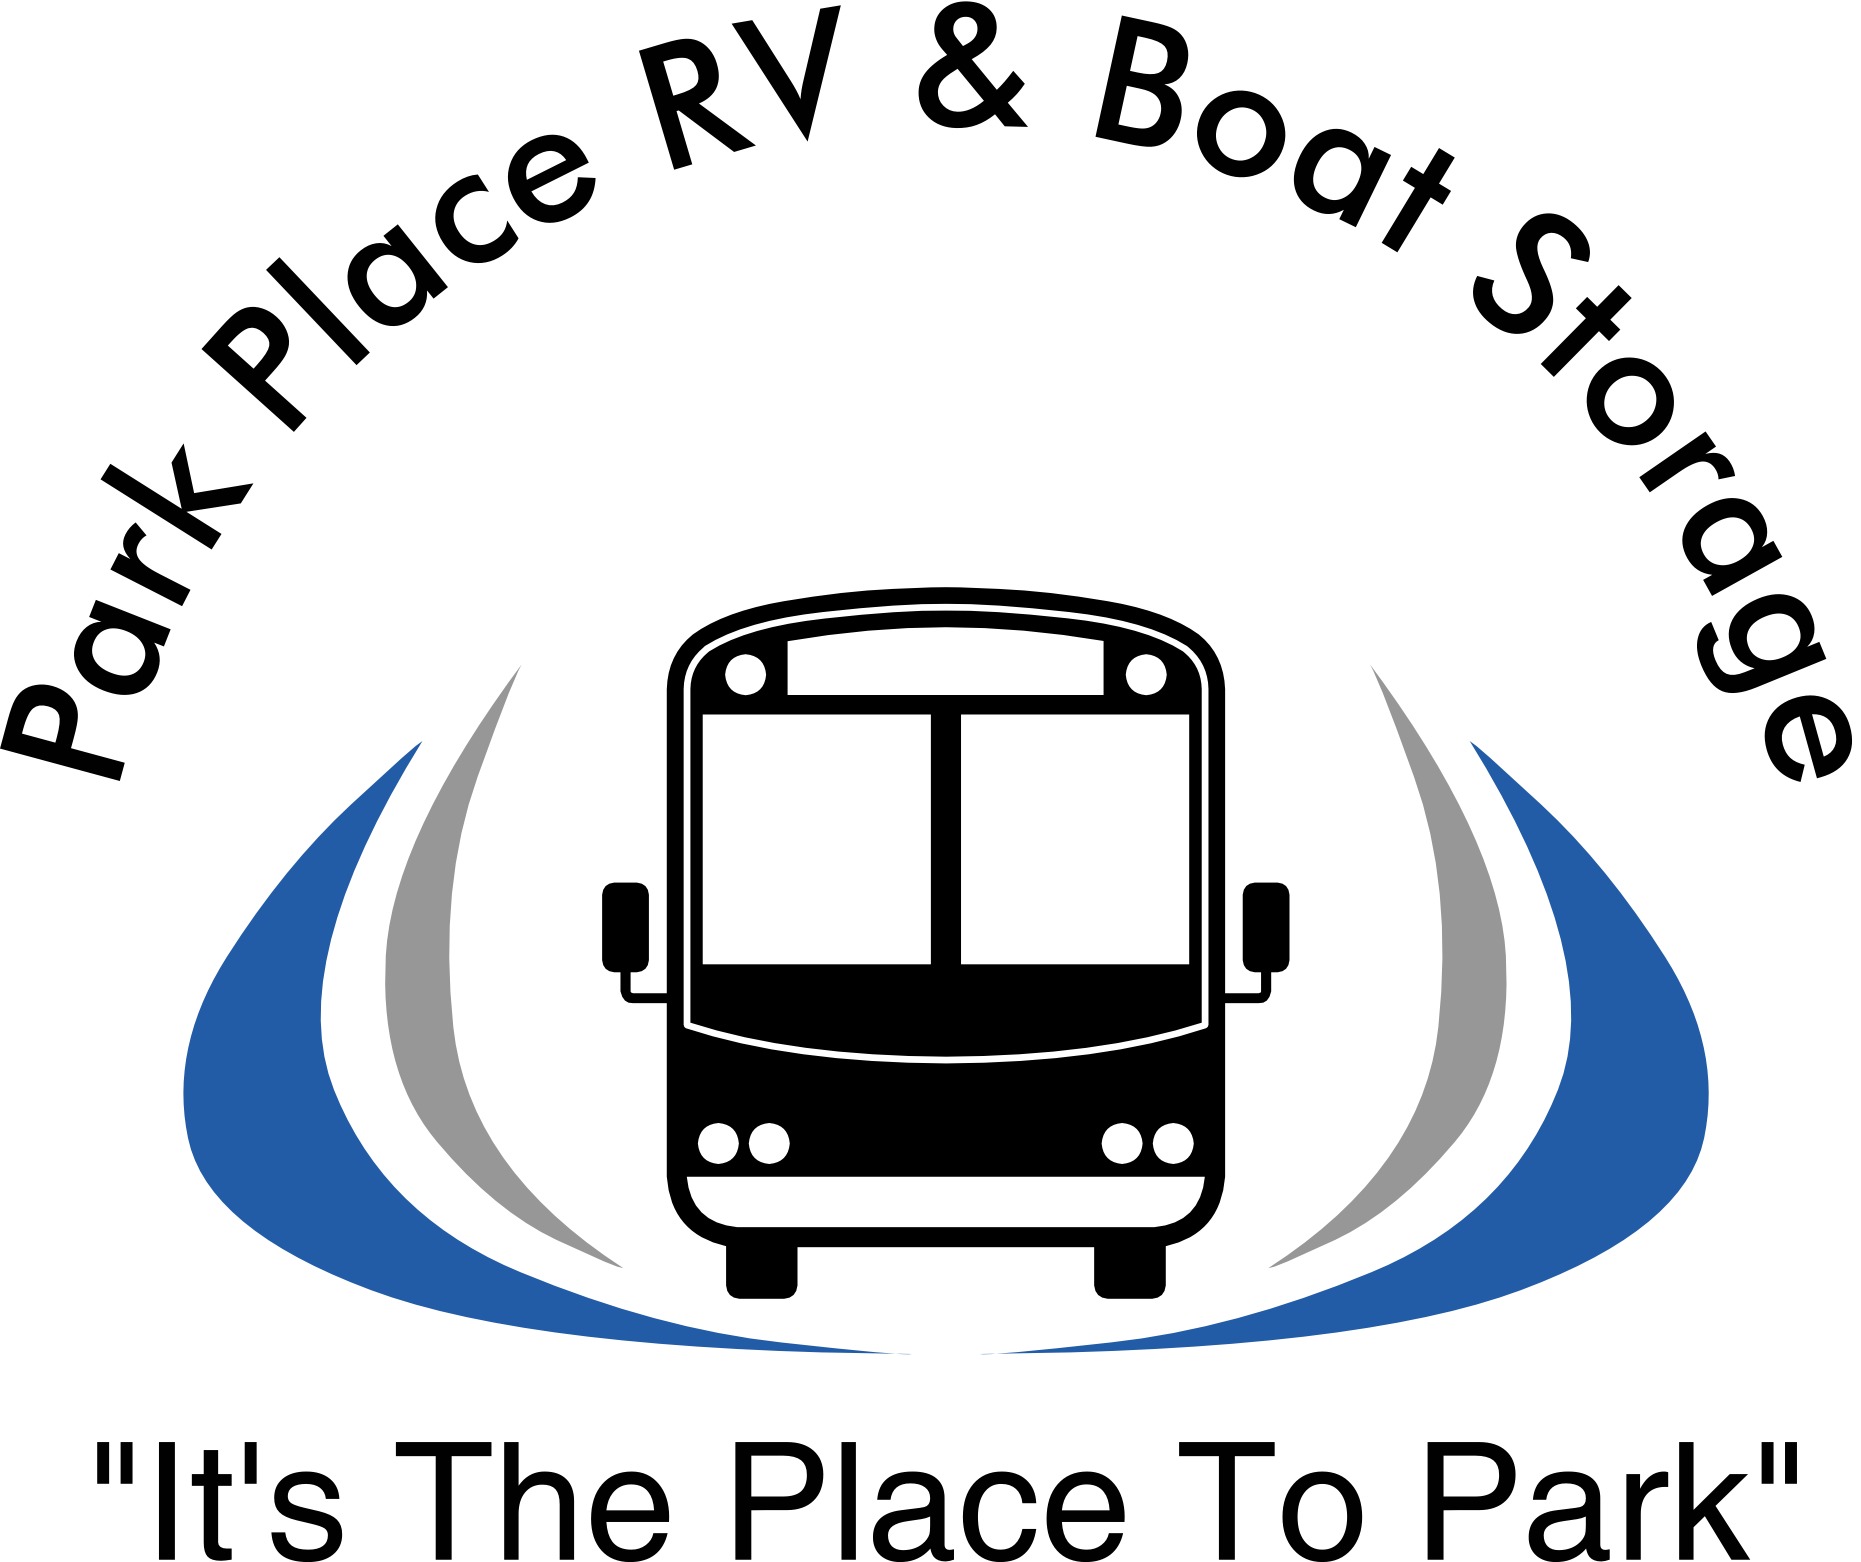 Park Place RV & Boat Storage